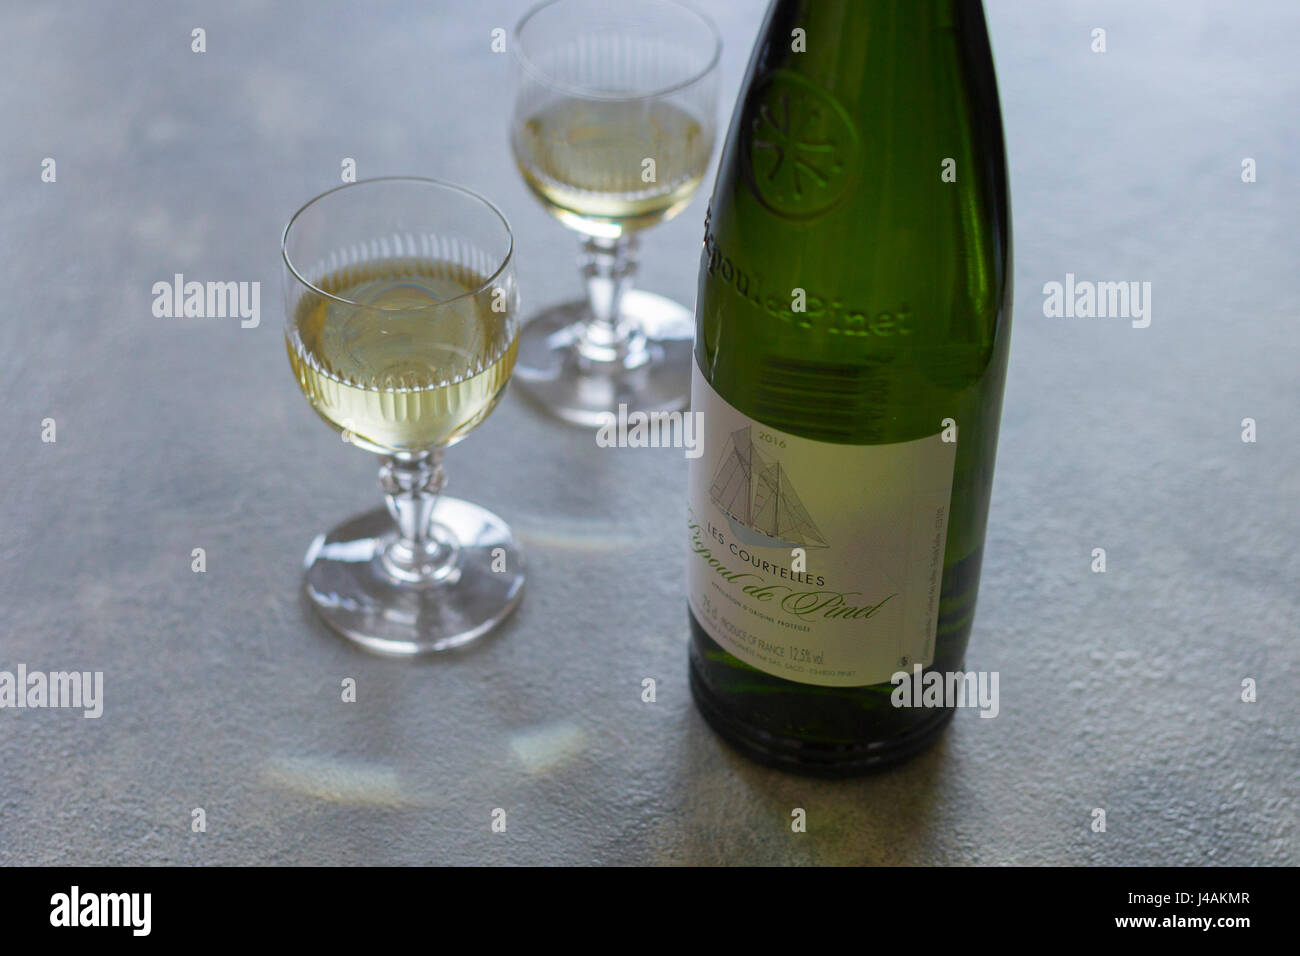 Bottle of French wine Stock Photo